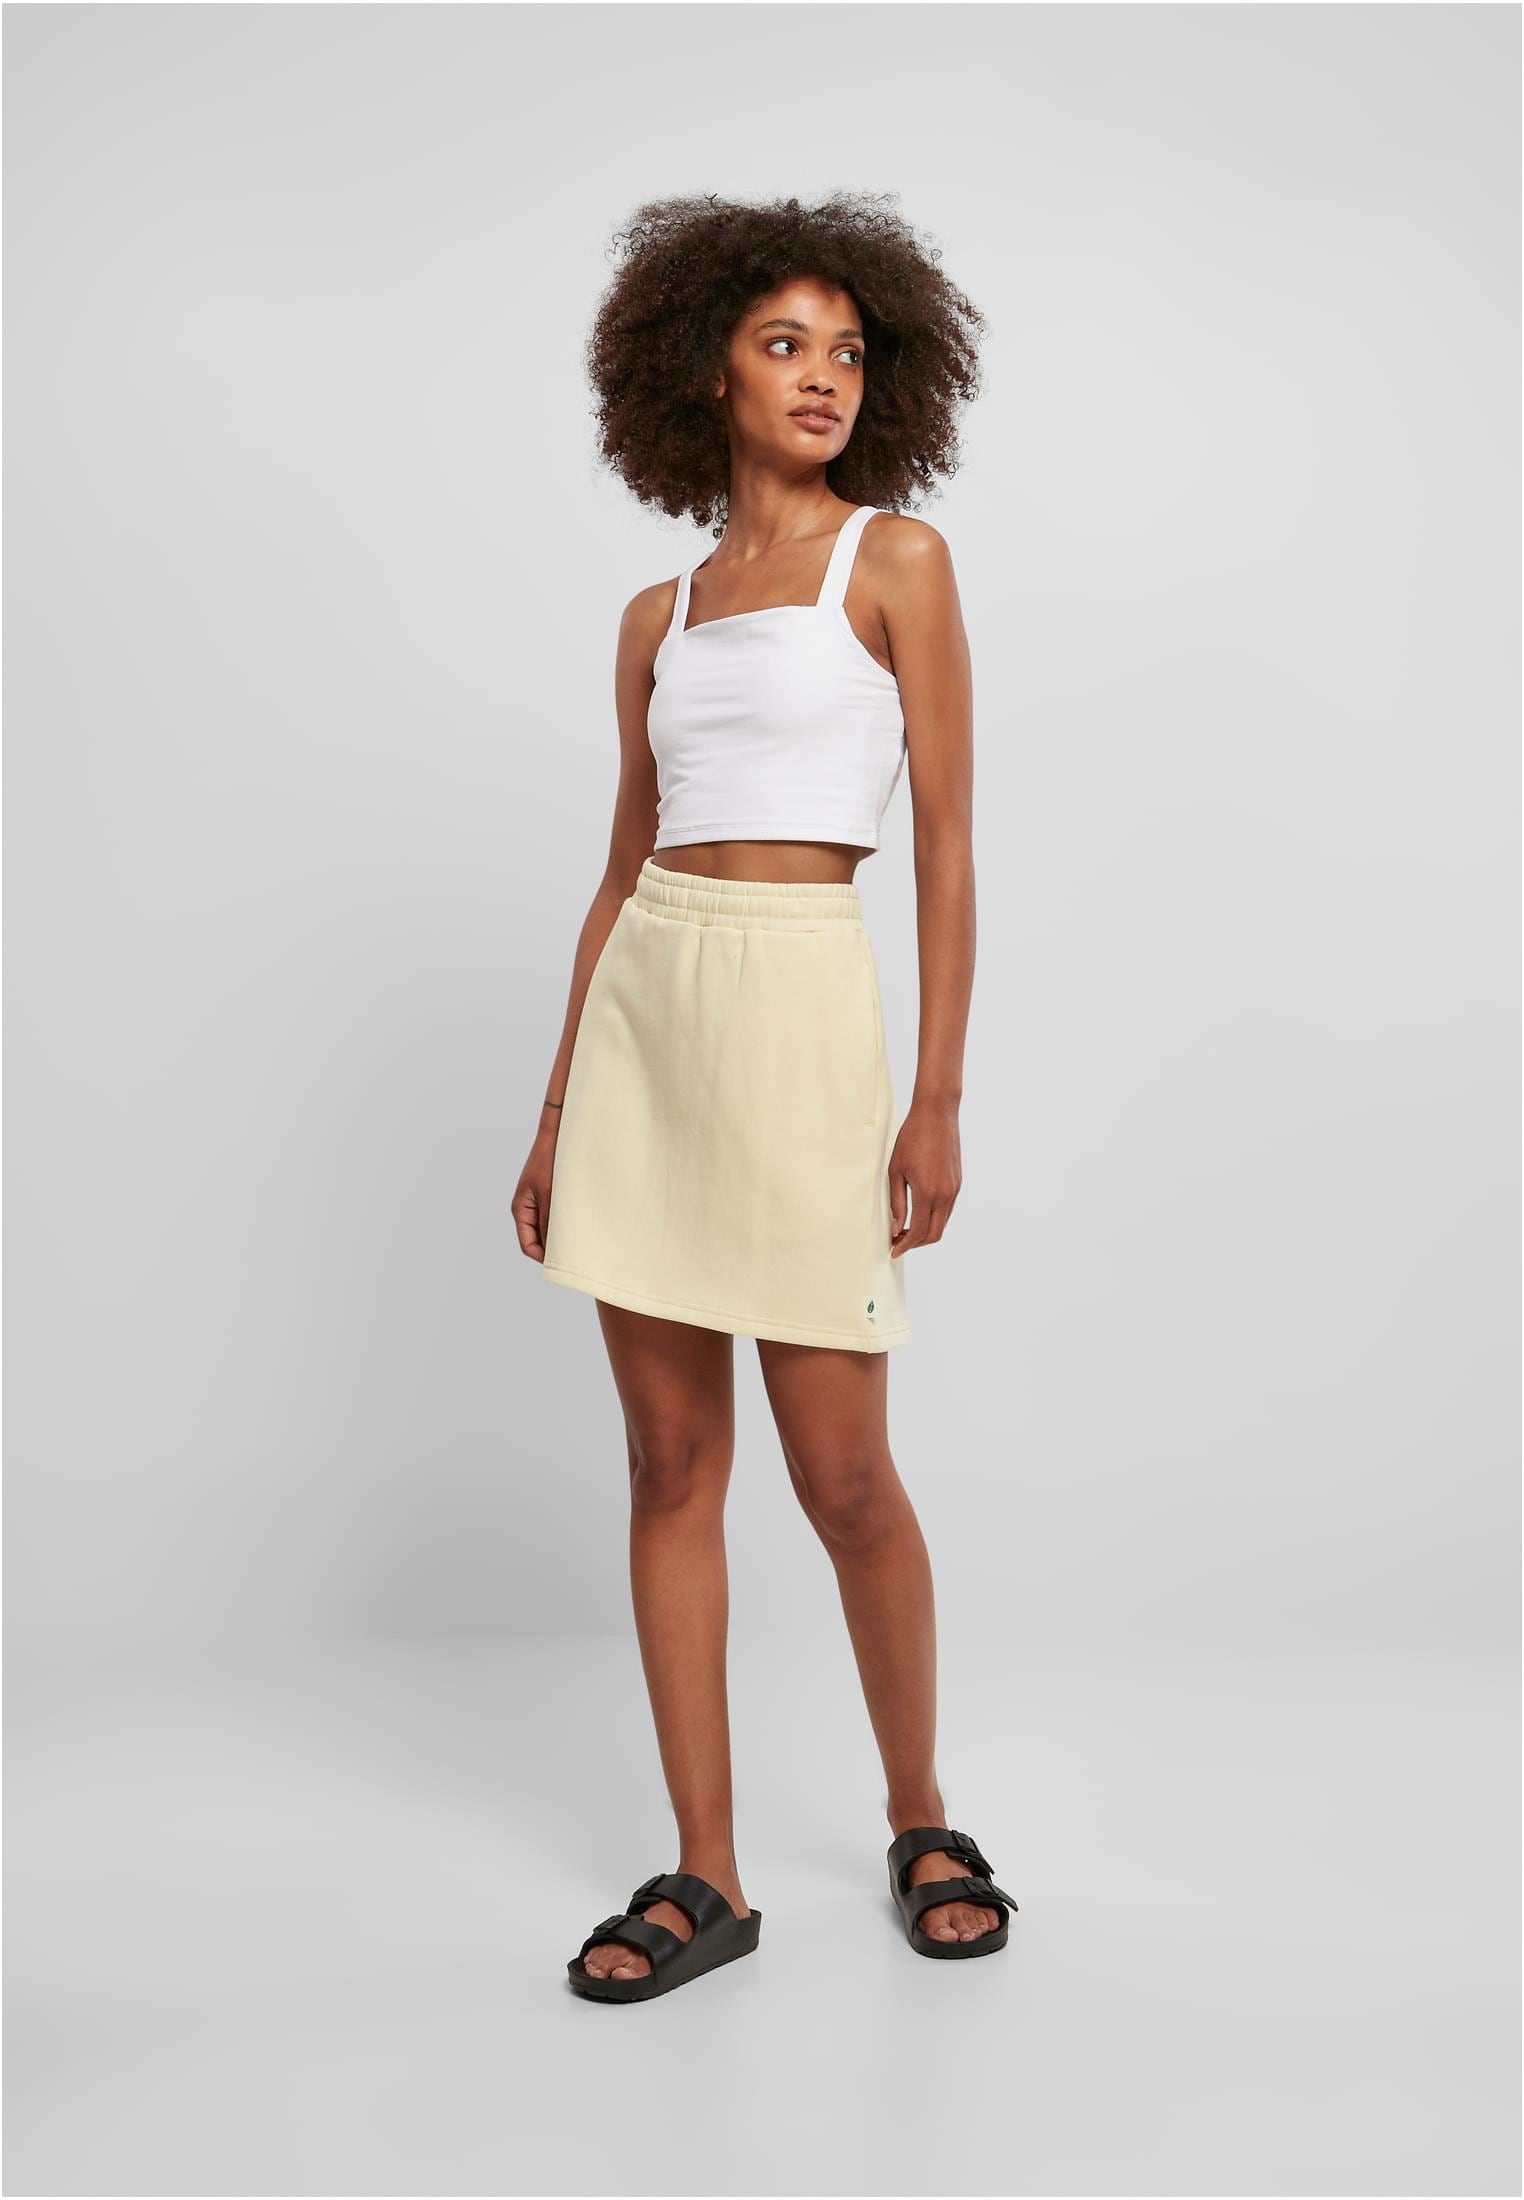 URBAN CLASSICS Jerseyrock für Ladies Skirt«, Terry Organic (1 »Damen tlg.) BAUR Mini kaufen 